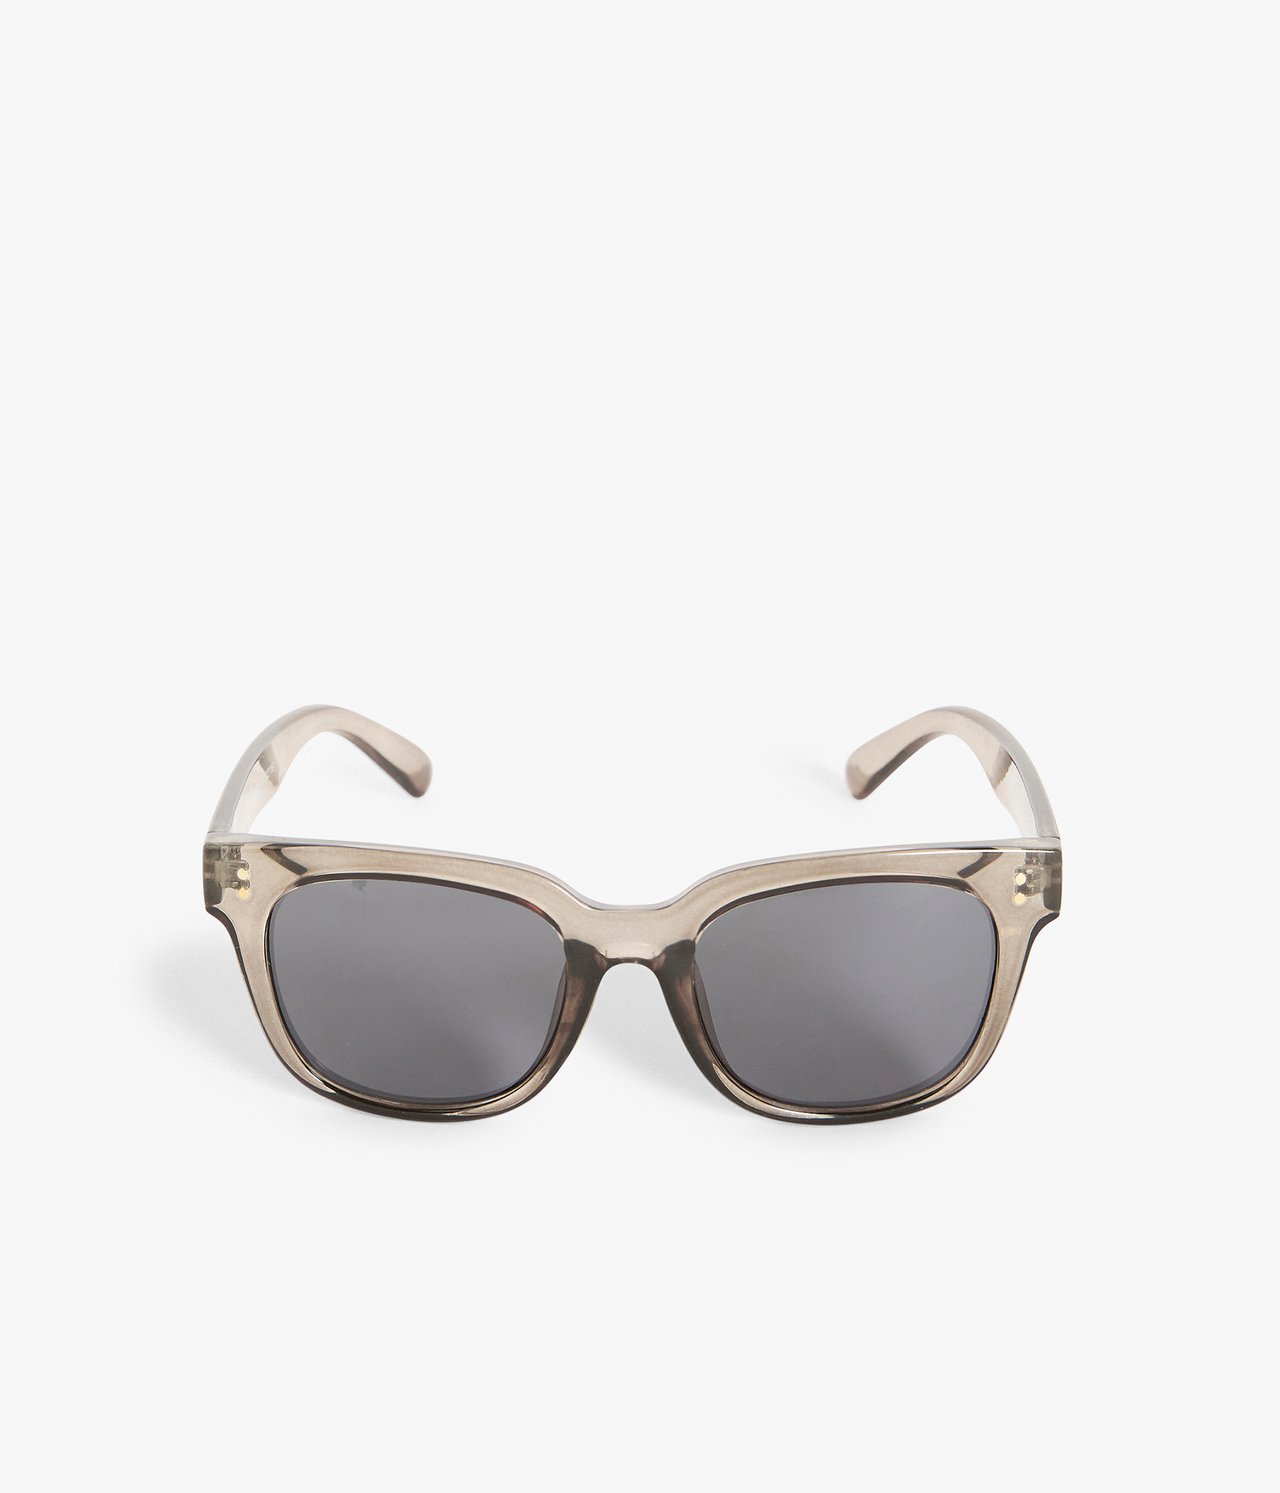 Solbriller dame - Grå - 1